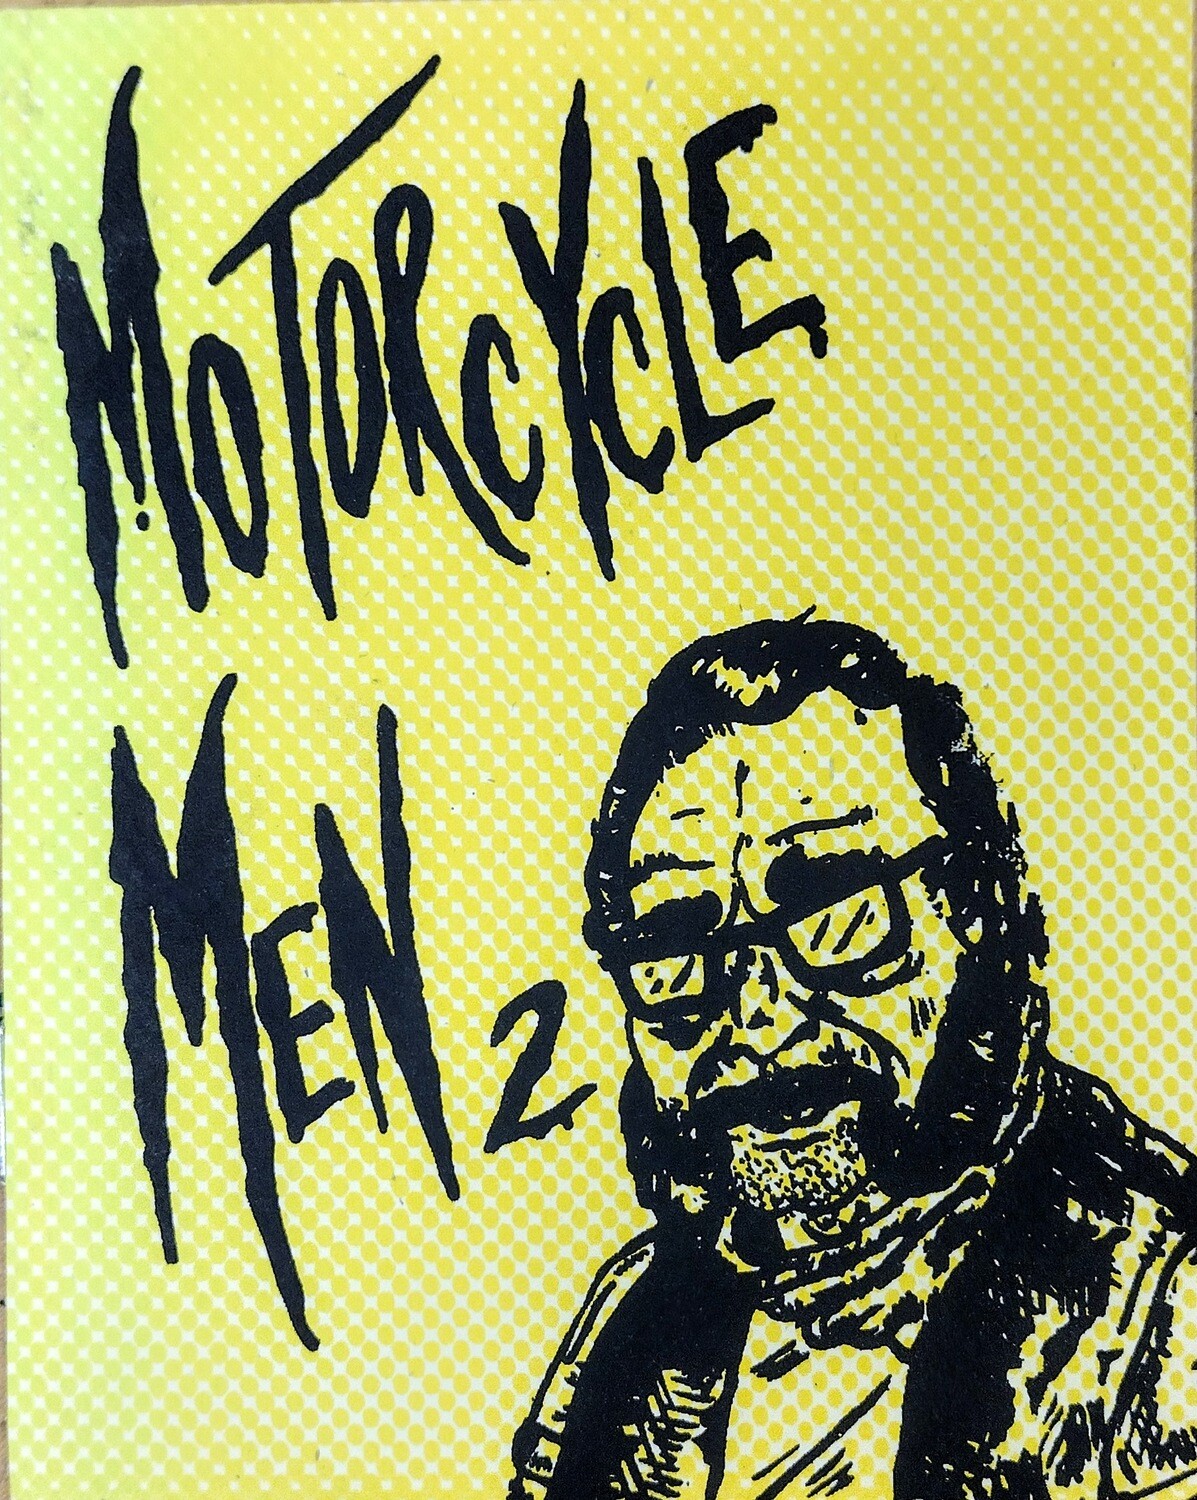 Motorcycle Men #2  - Zine by Amy Beardemphl